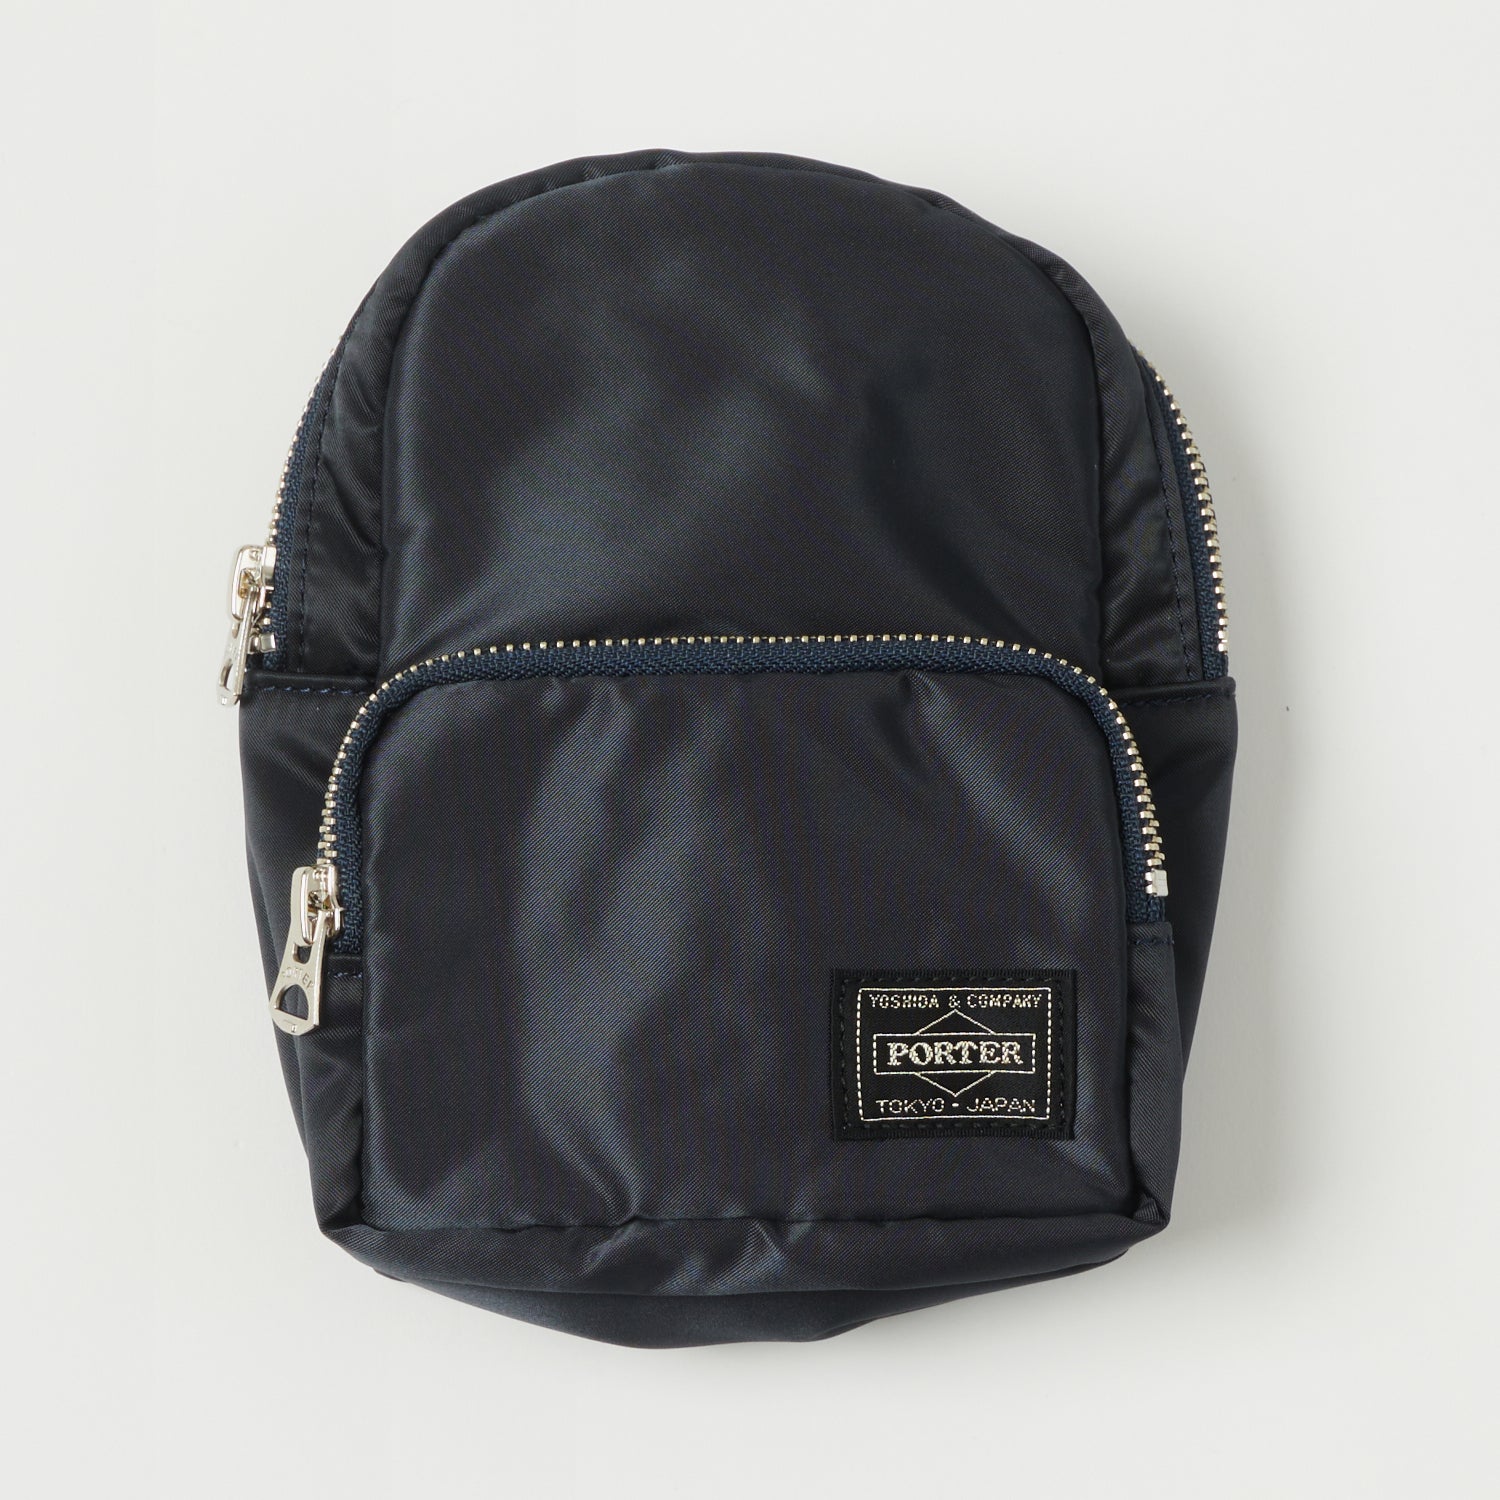 Porter-Yoshida & Co. Howl Mini Daypack - Navy | SON OF A STAG